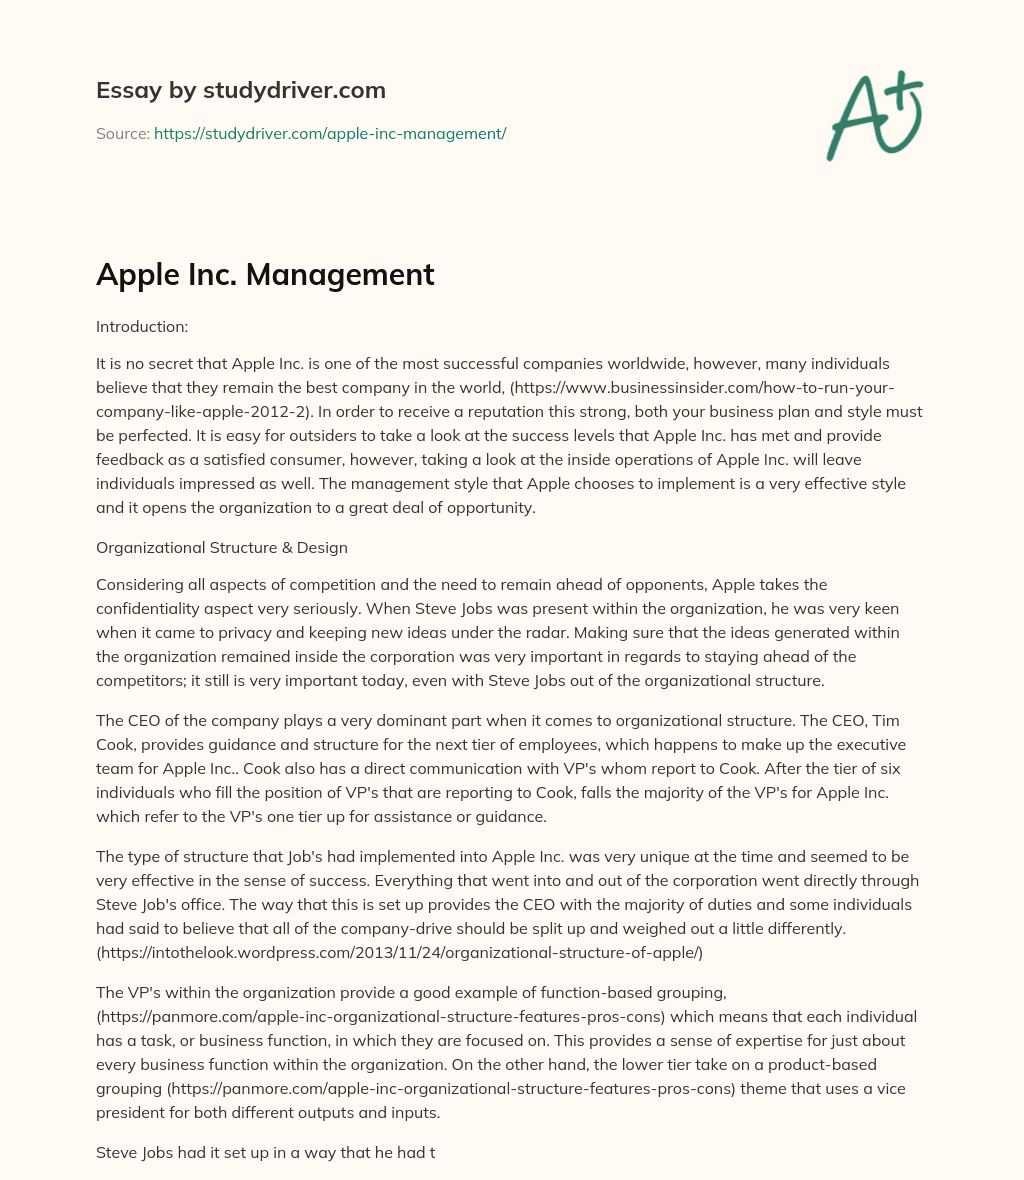 Apple Inc. Management essay